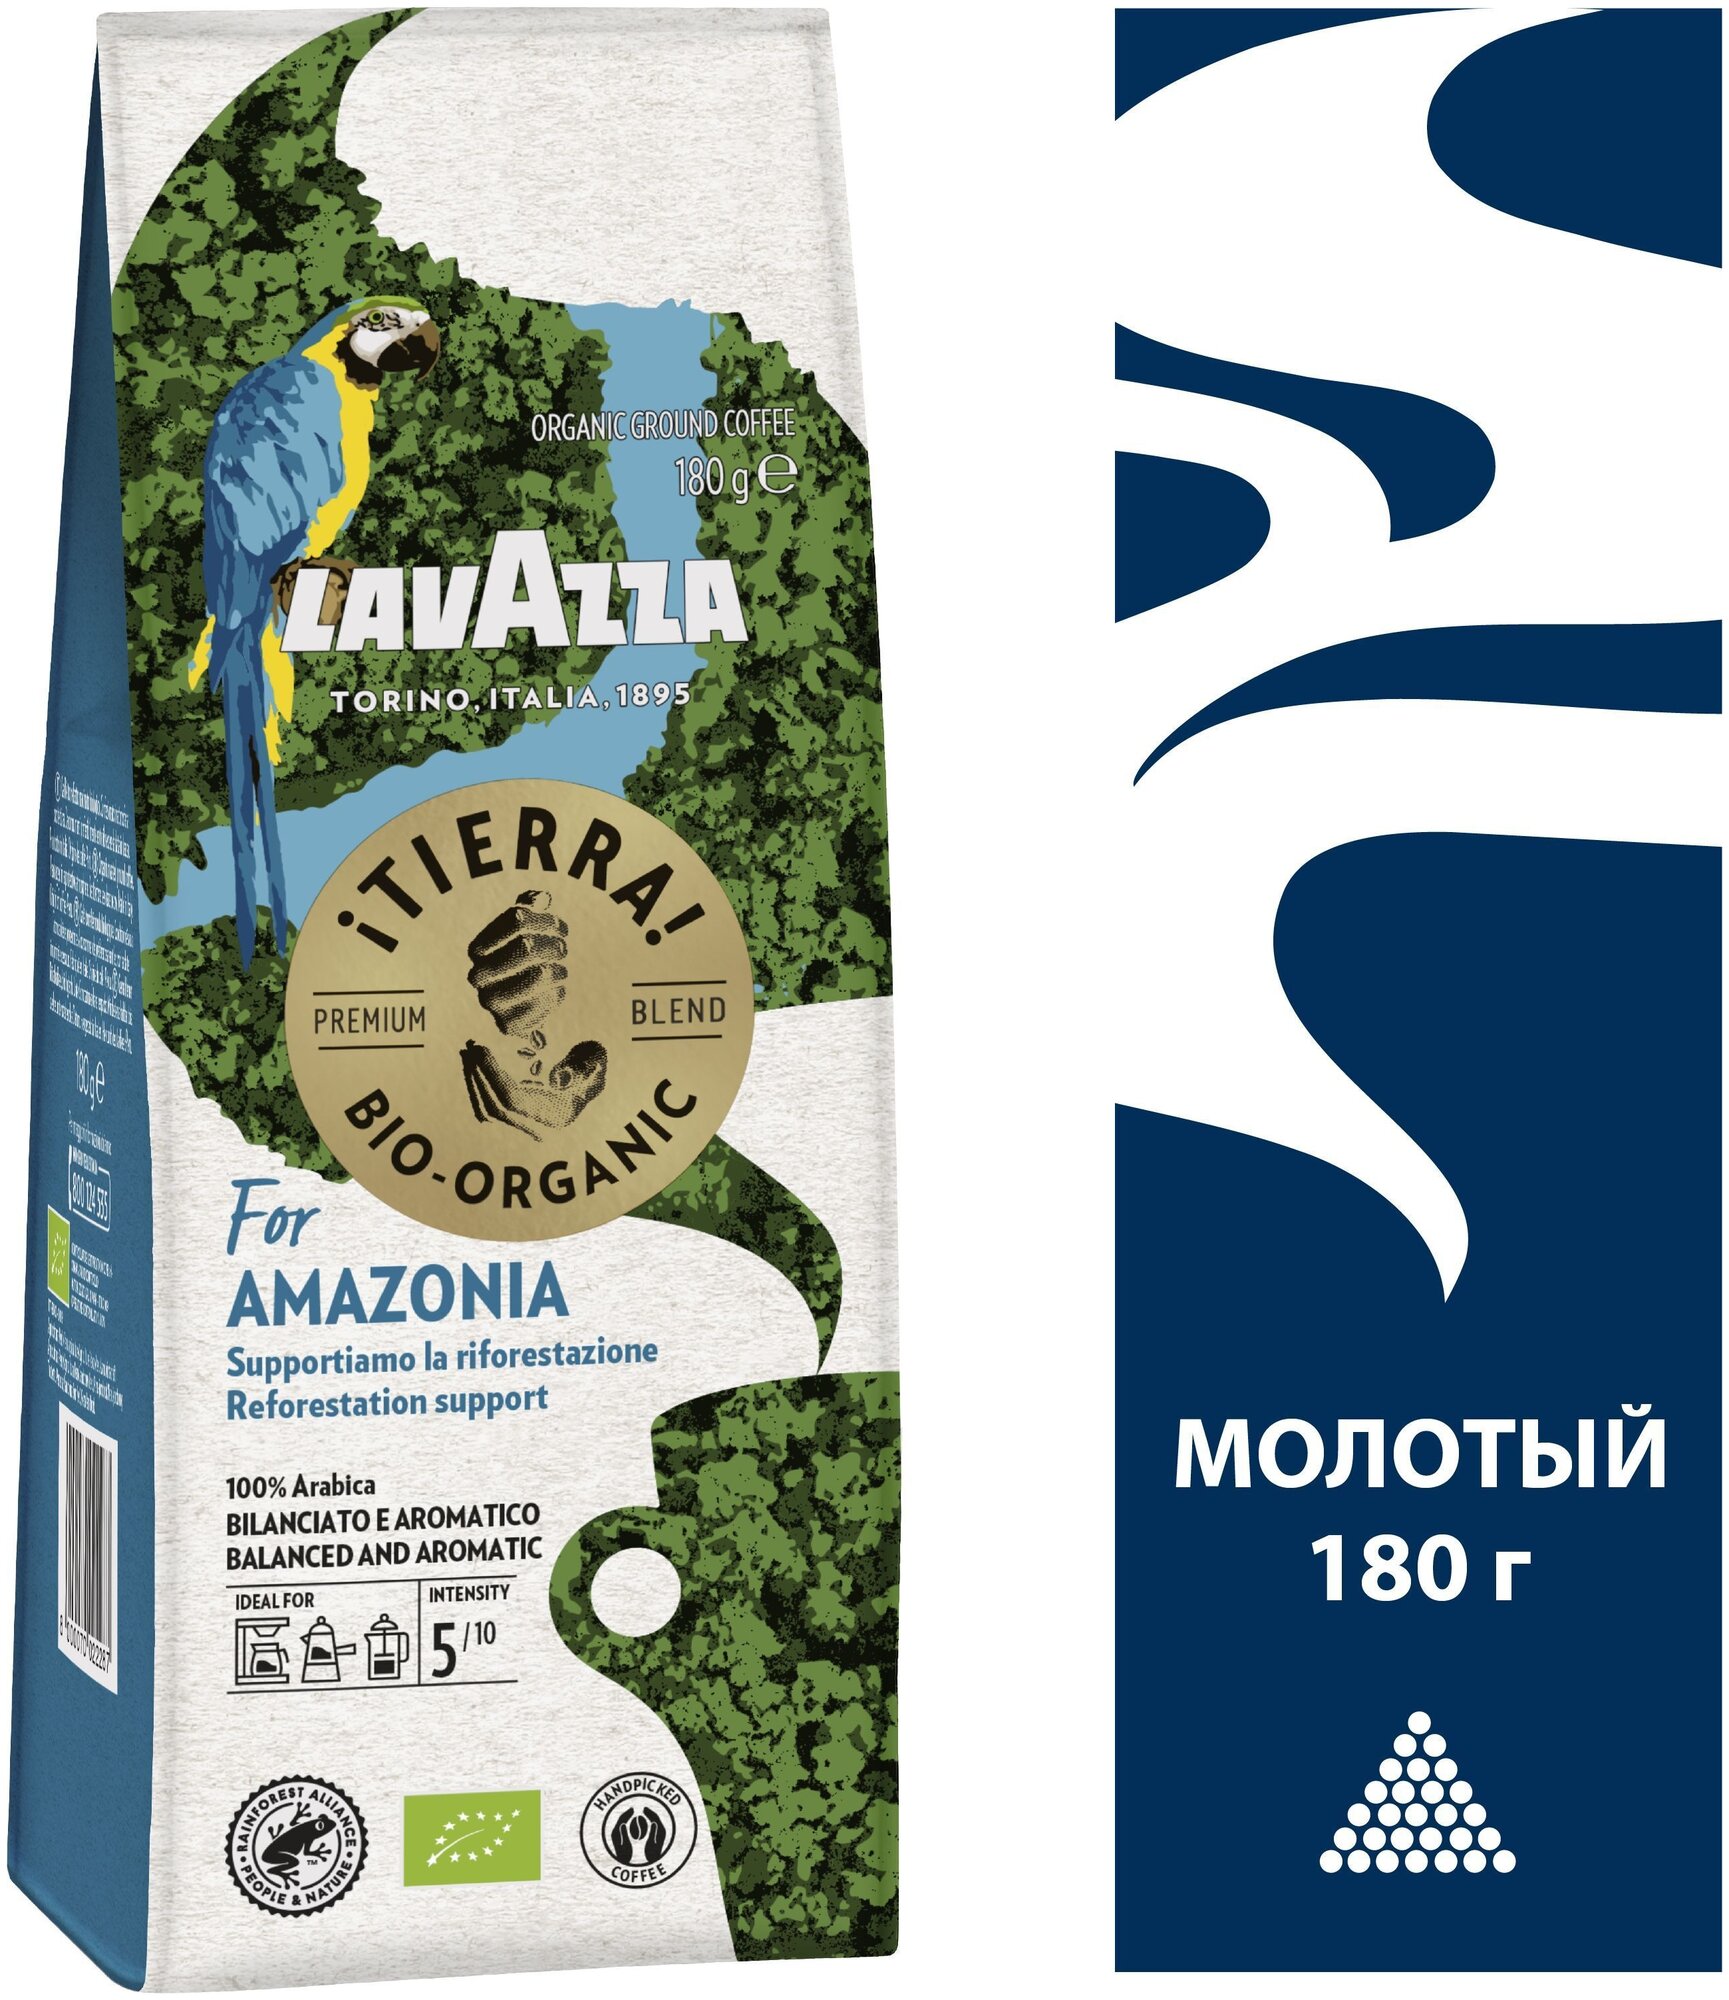 Кофе молотый Lavazza Tierra Bio-Organic for Amazonia (Тиерра за Амазонию), 180г - фотография № 2